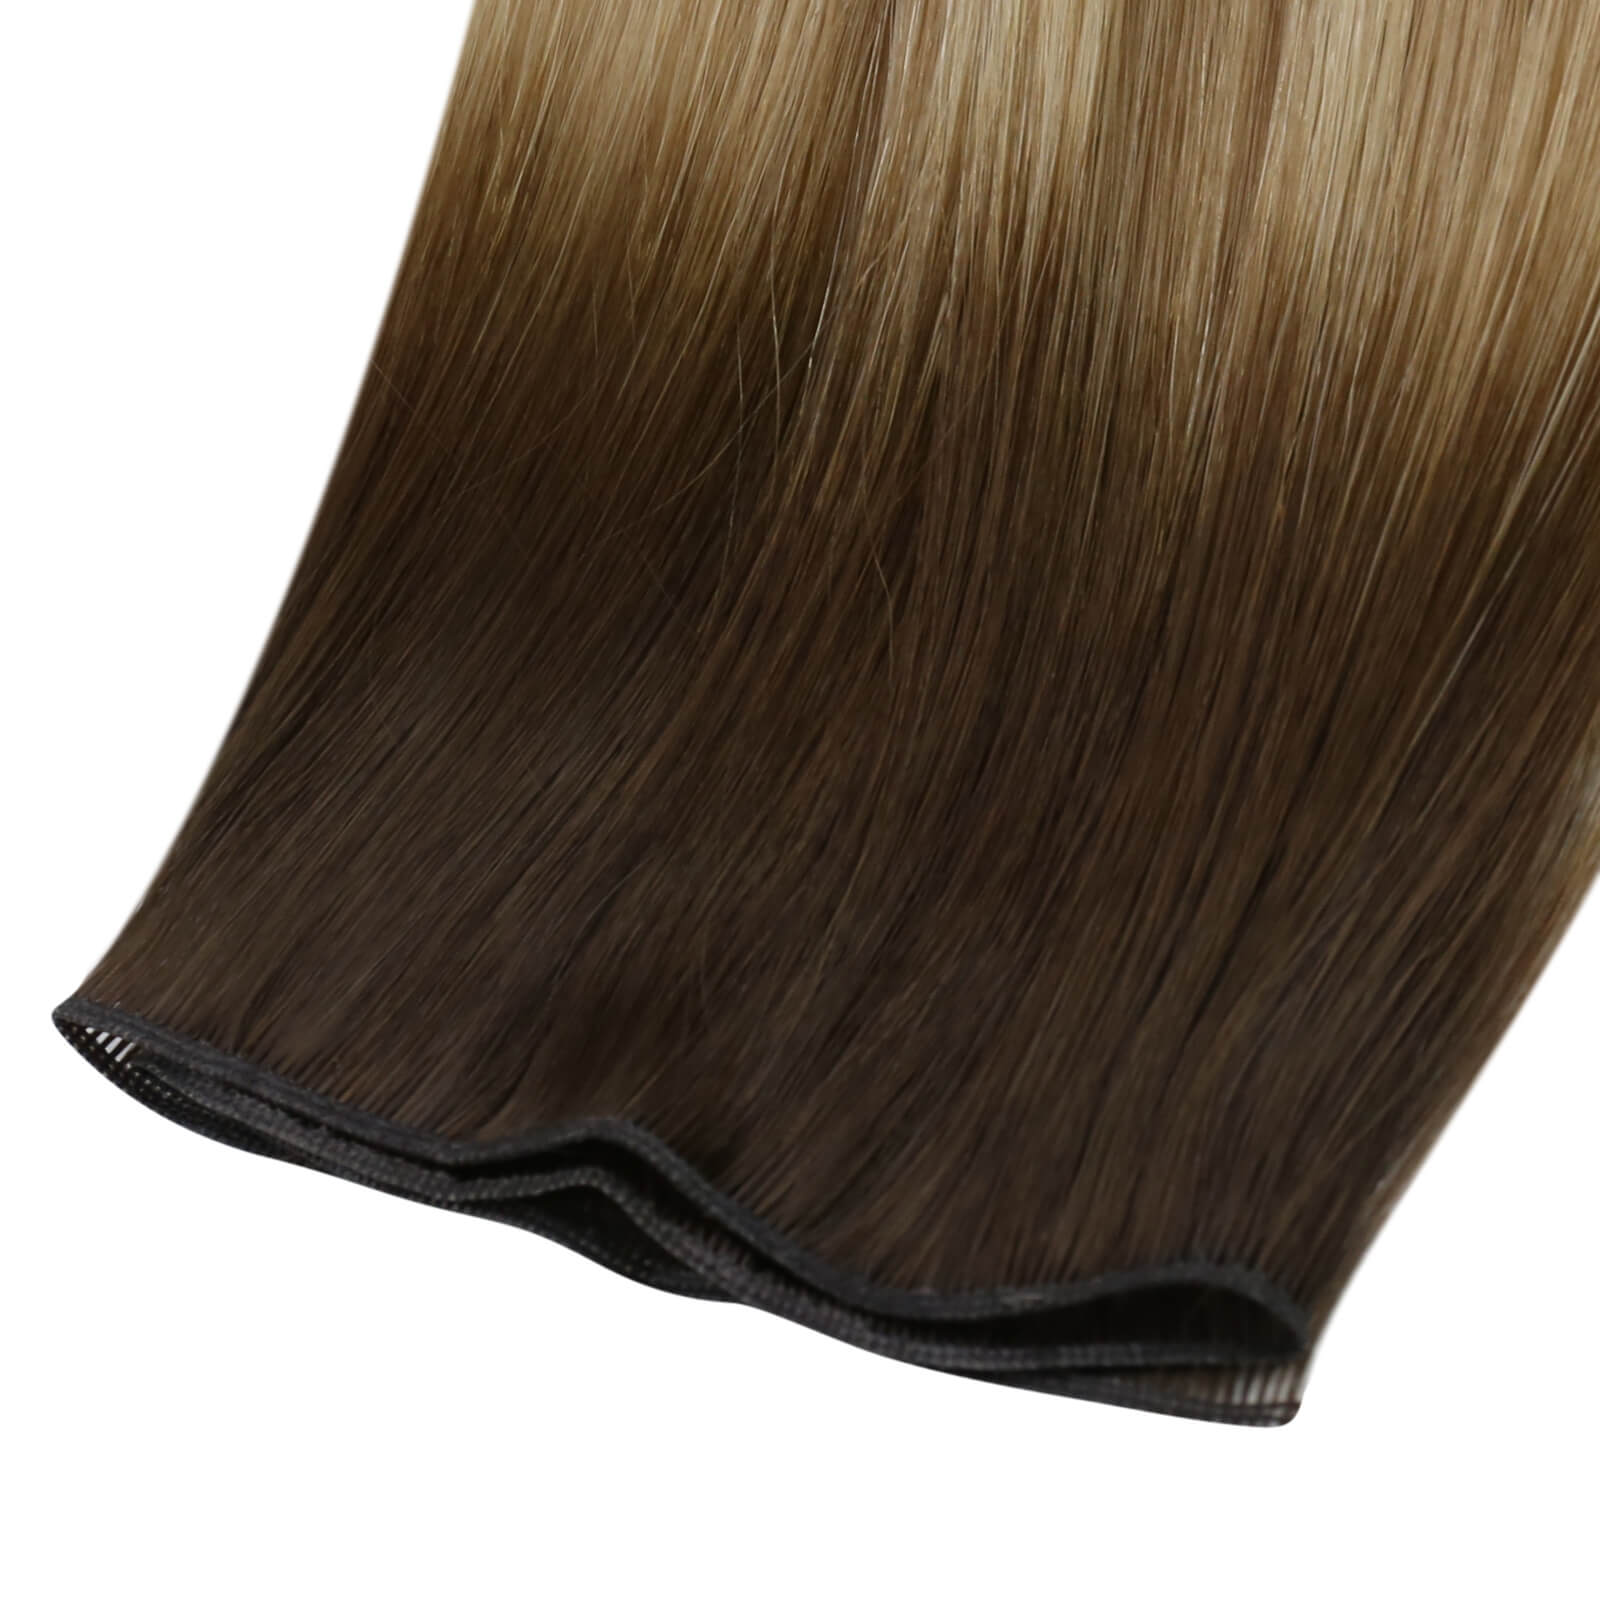 virgin hair extensions genius weft balayage brown with blonde